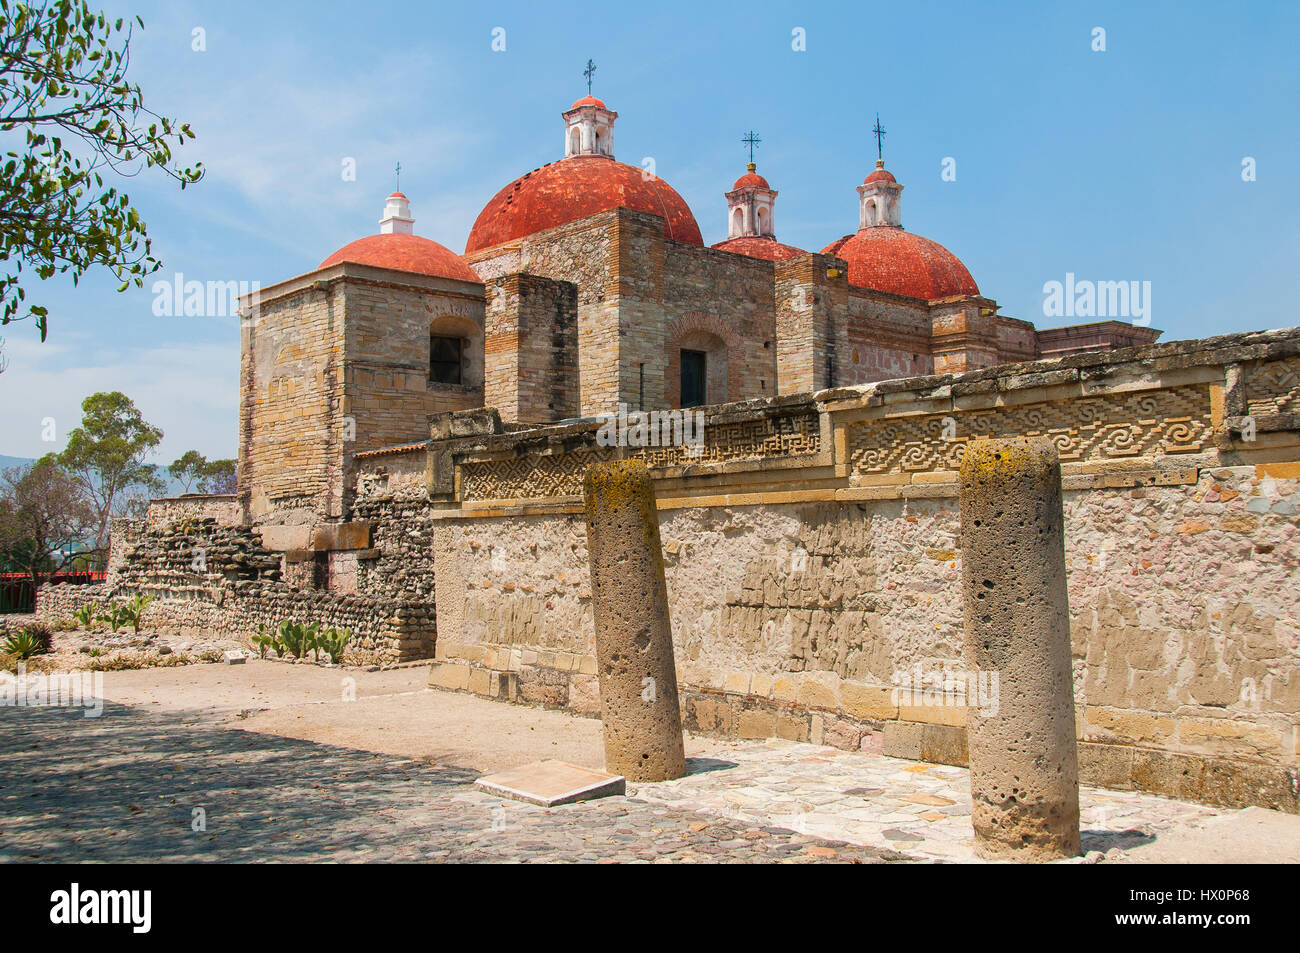 Column, church and palace of Palast Mitla Oaxaca, Mexico Stock Photo